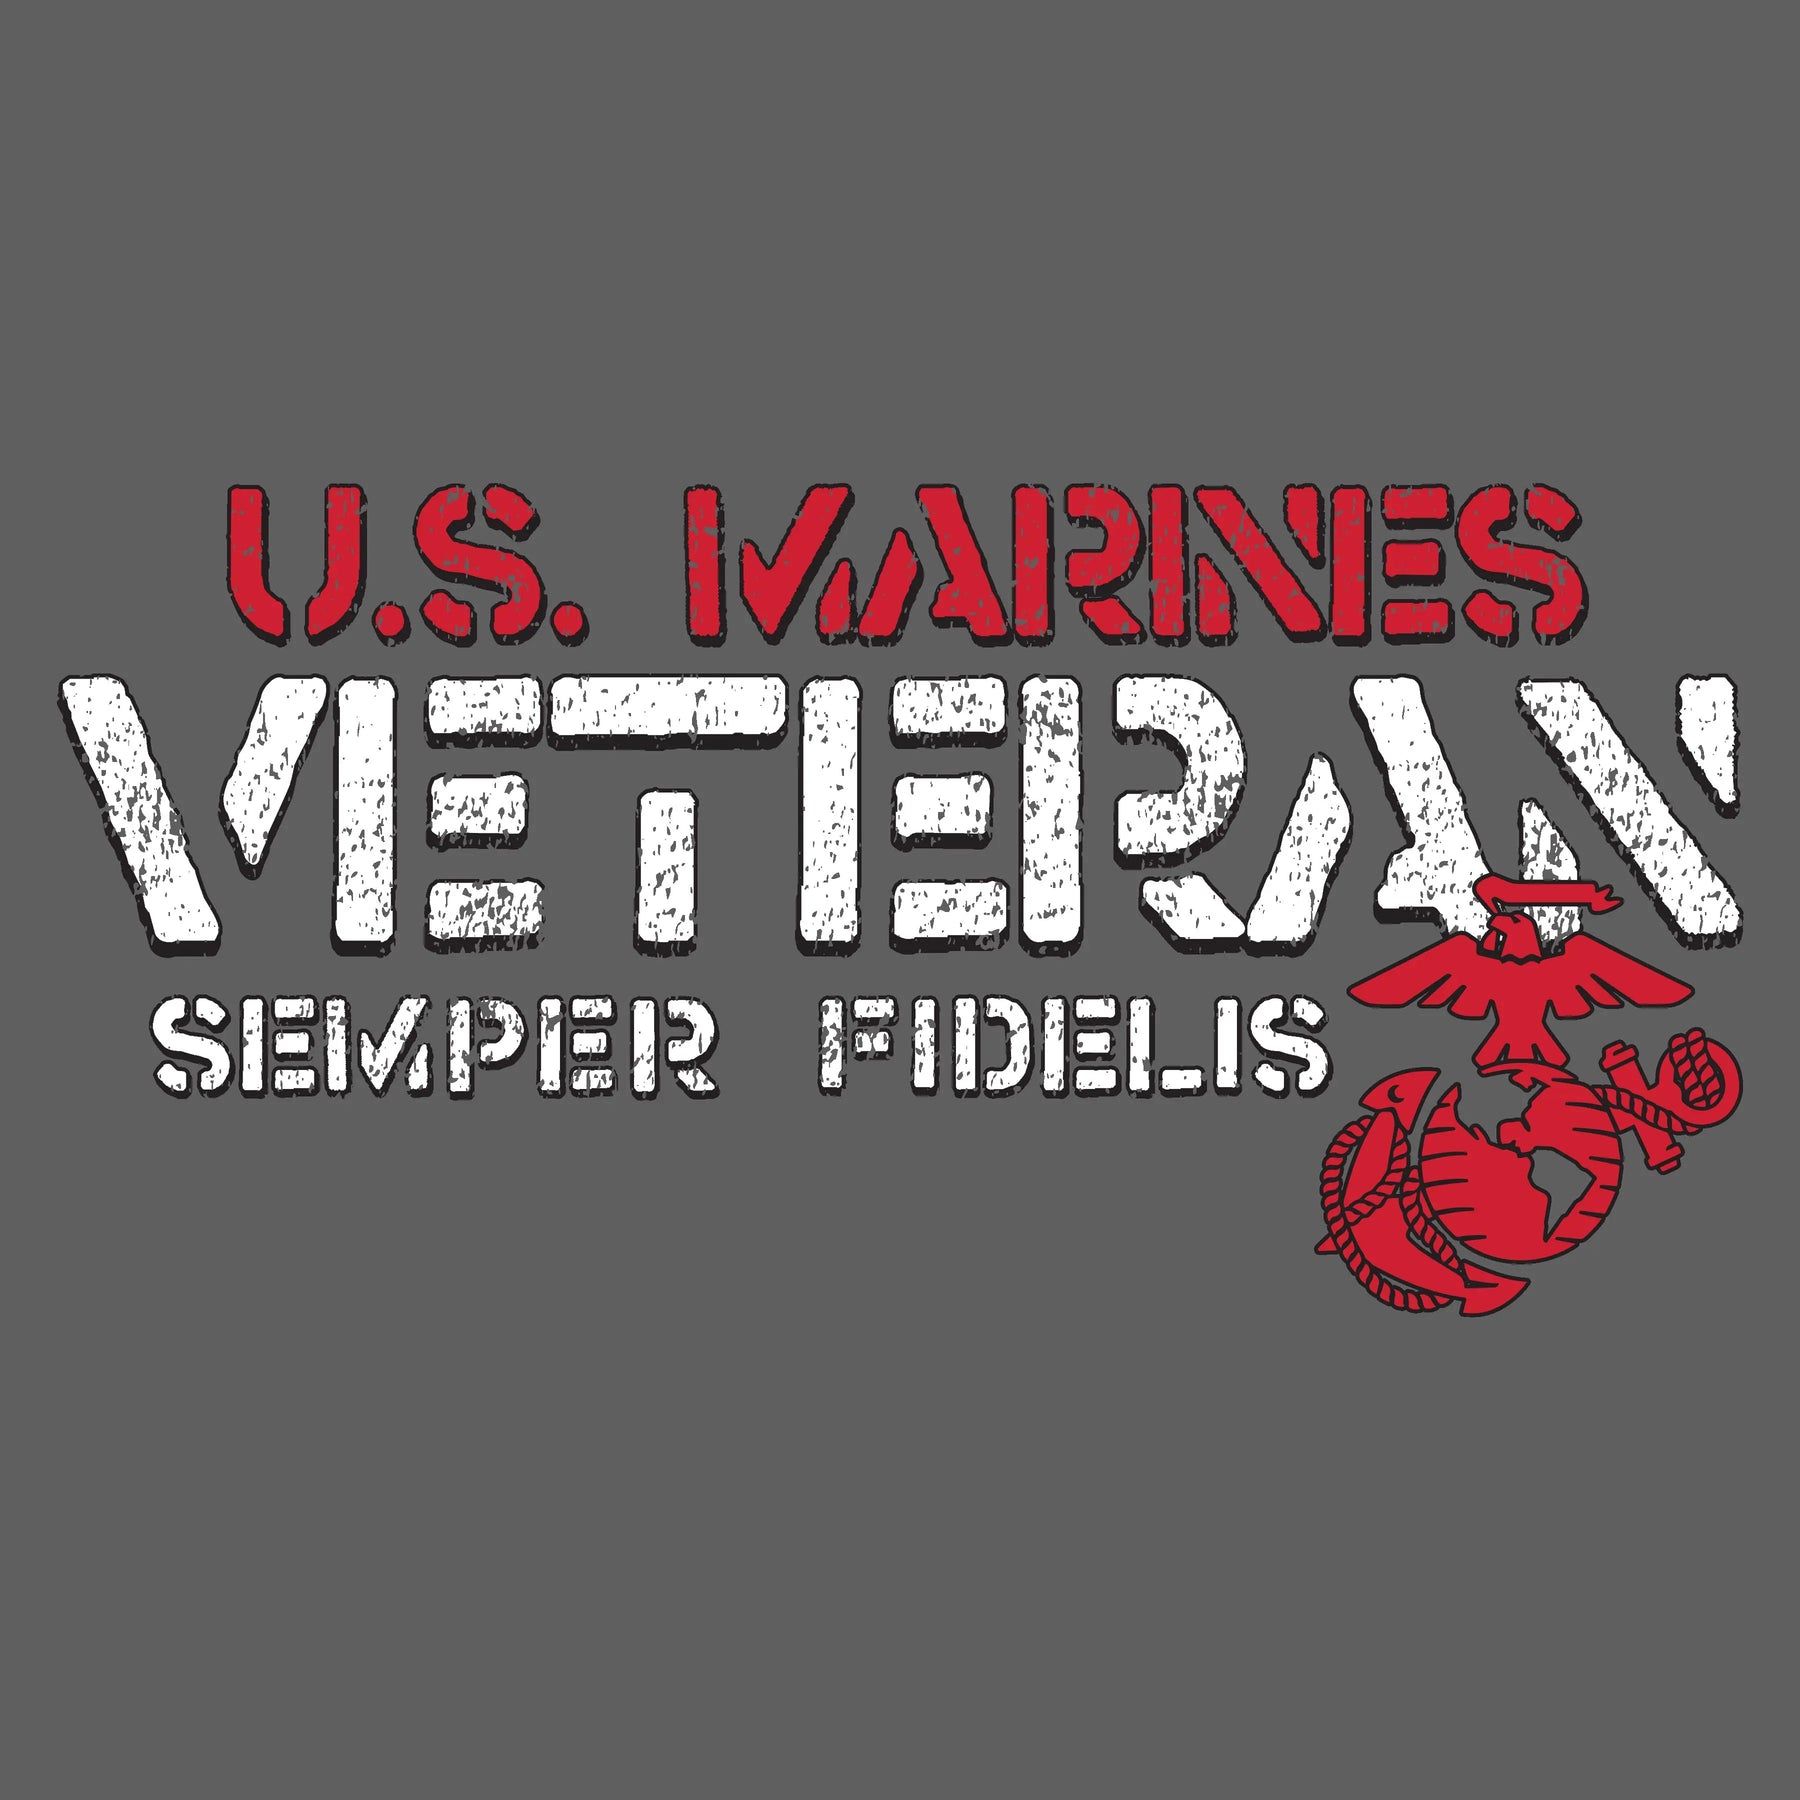 U.S. Marines Veteran Sweatshirt